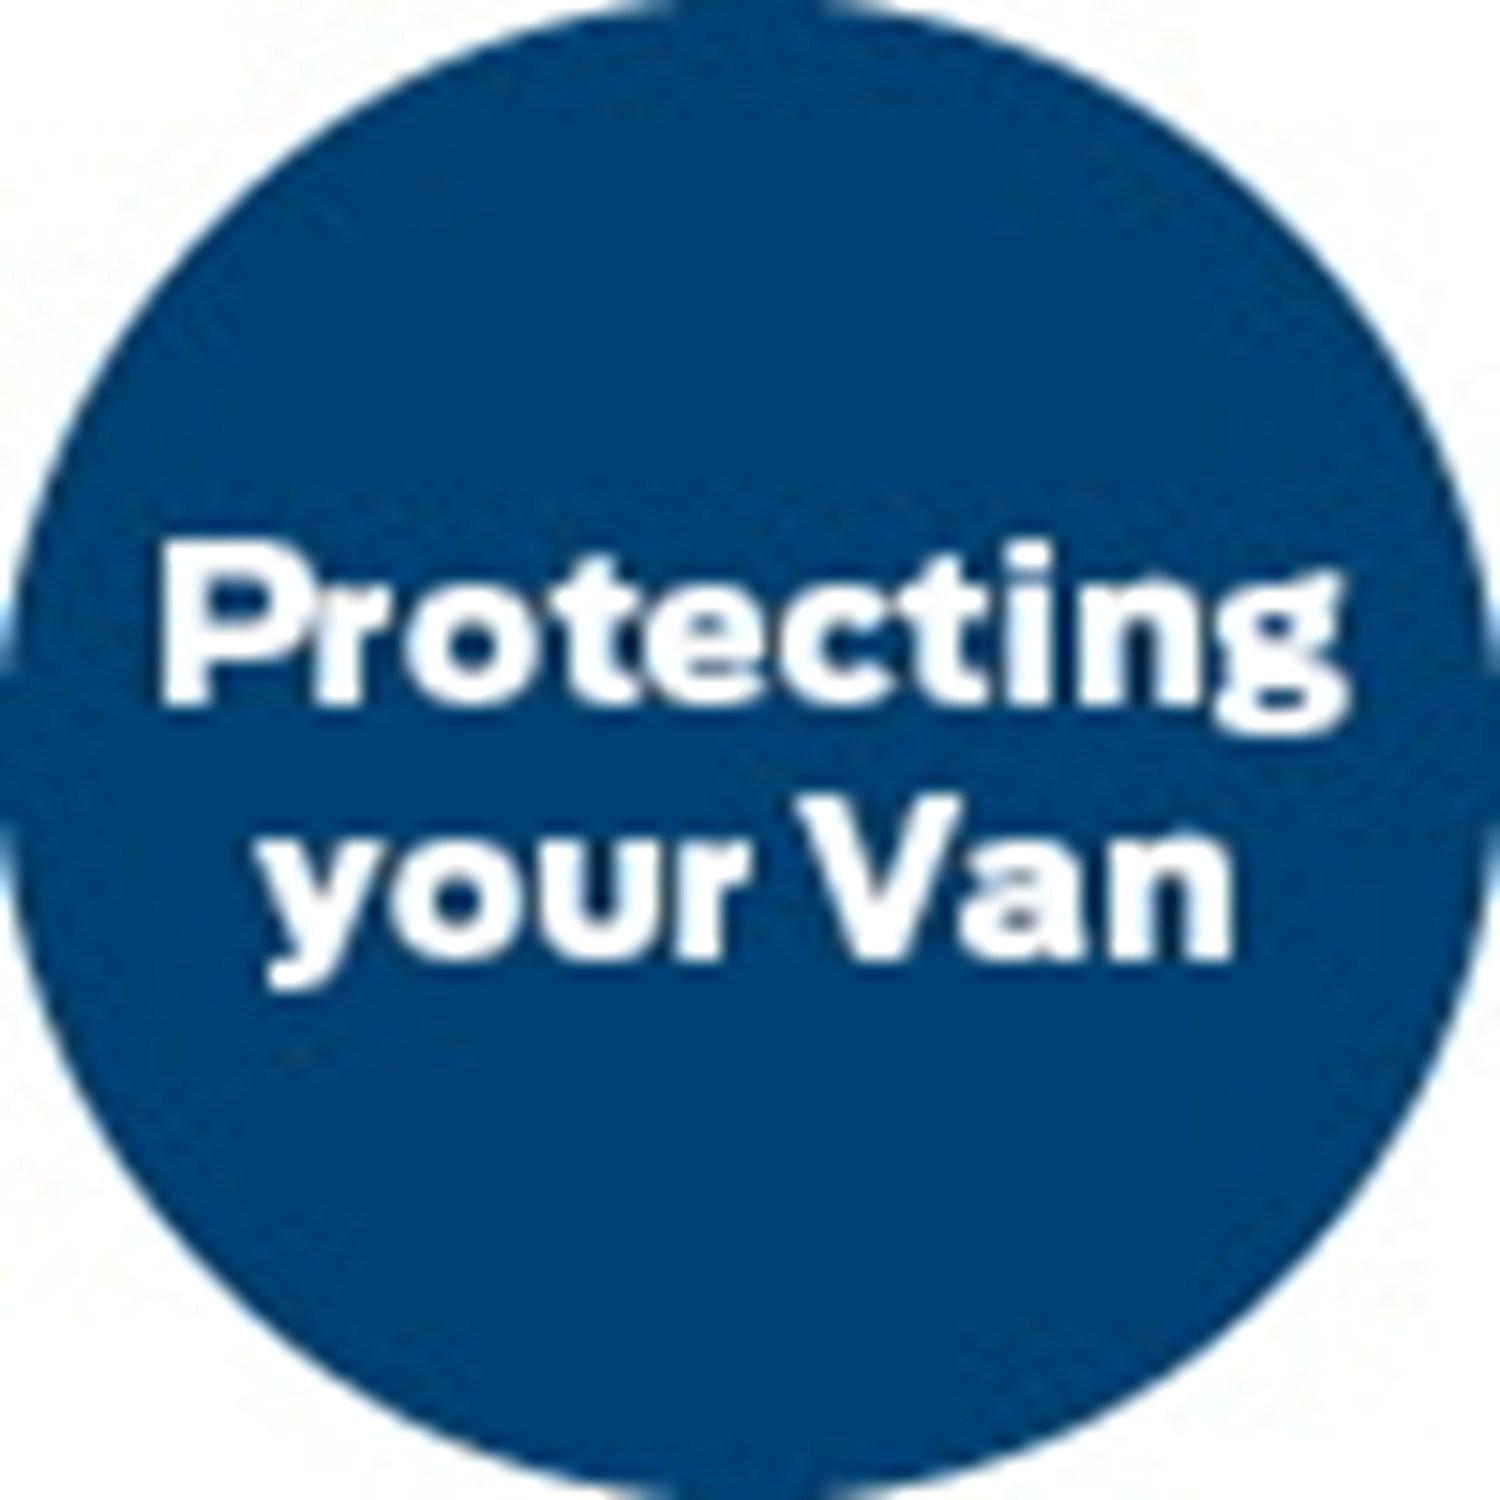 Protecting your van icon